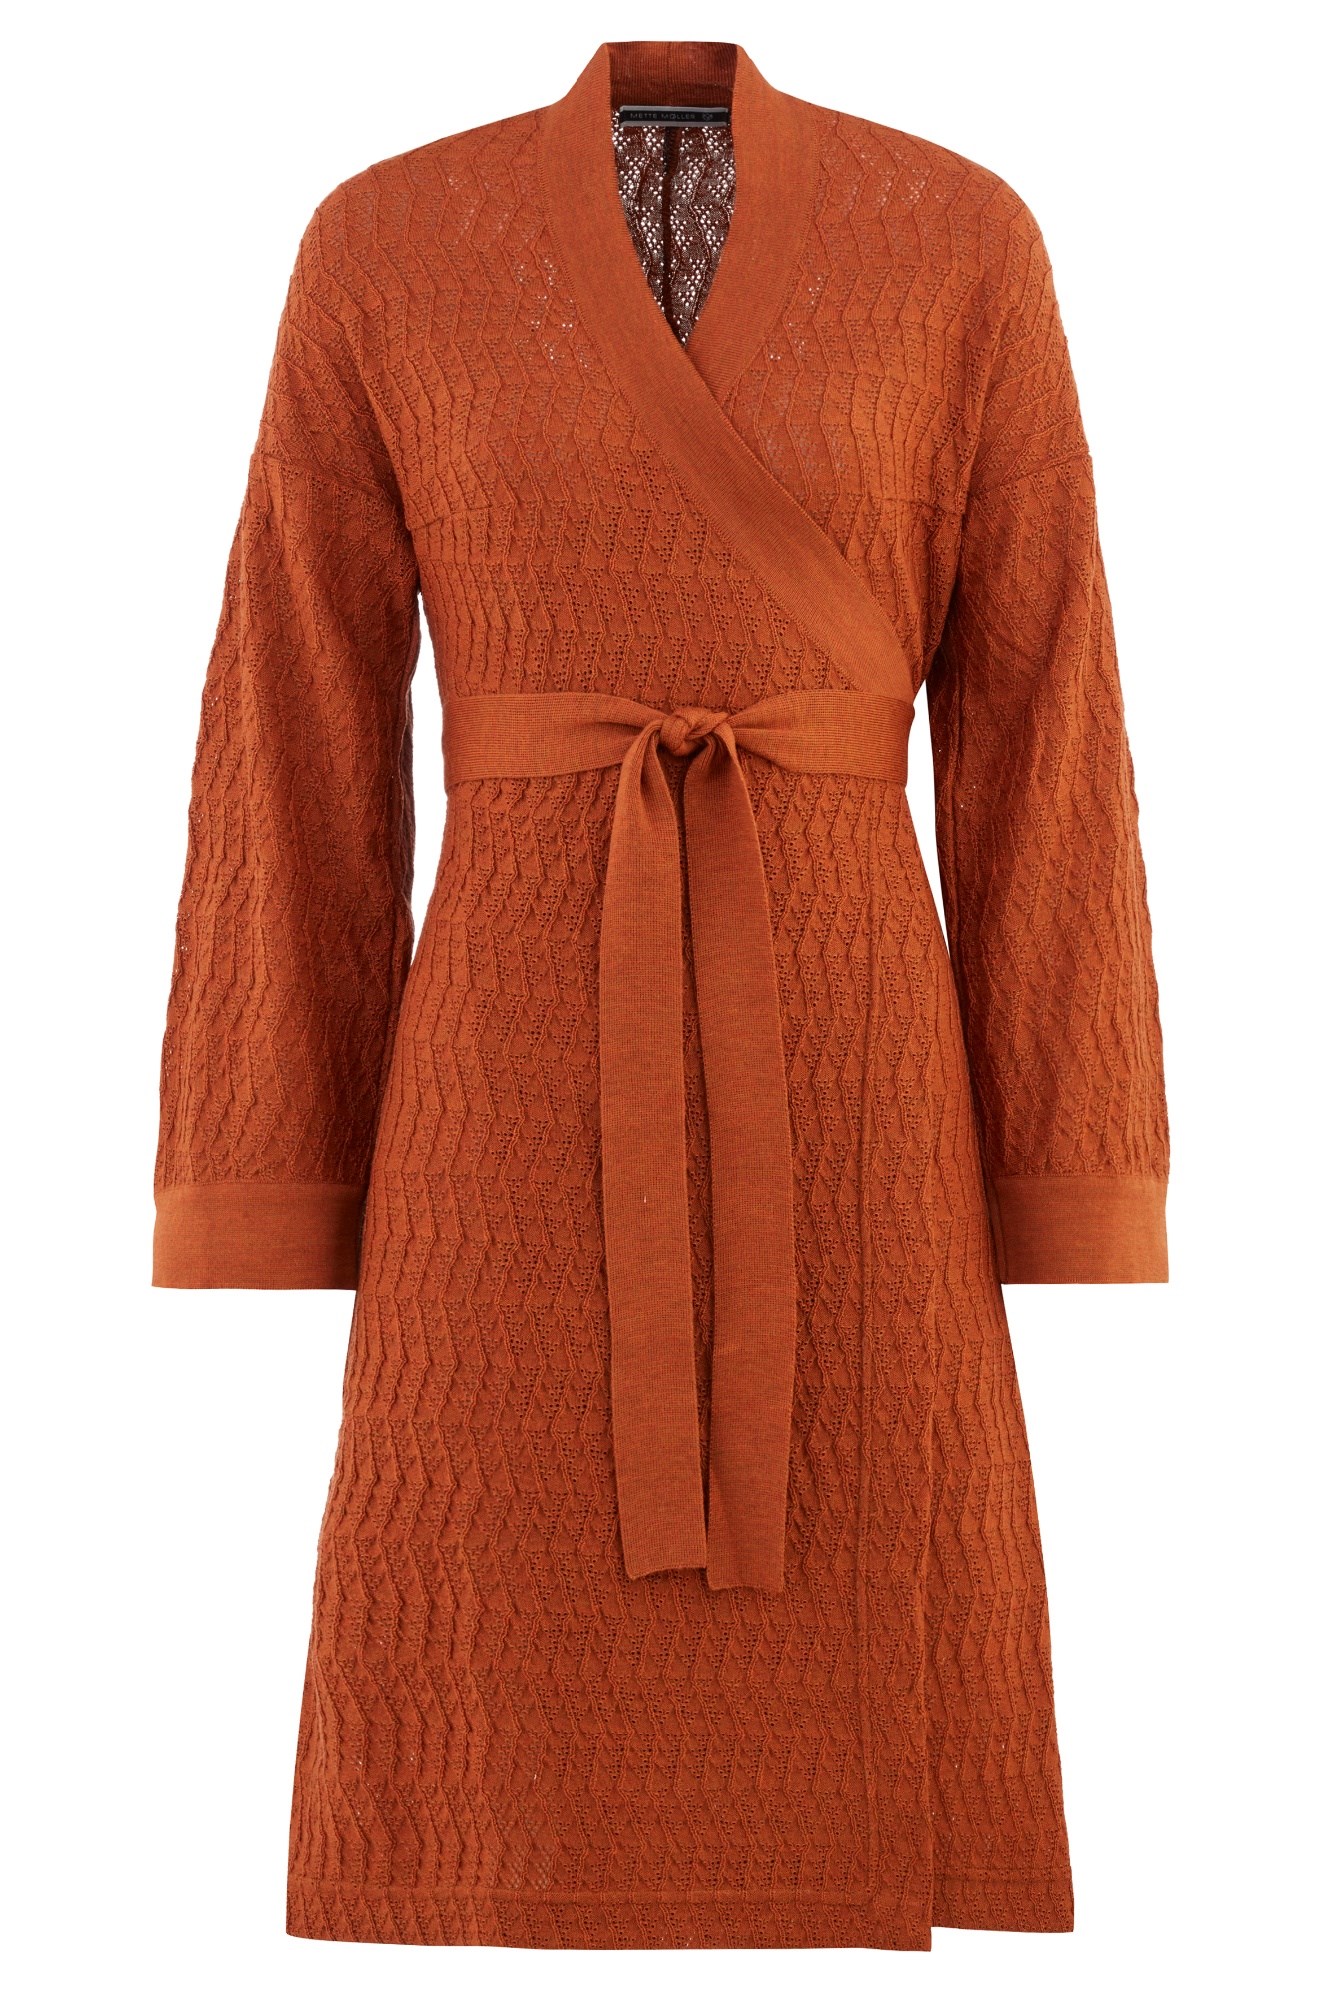 Lace wrap dress - Dress - Merino wool